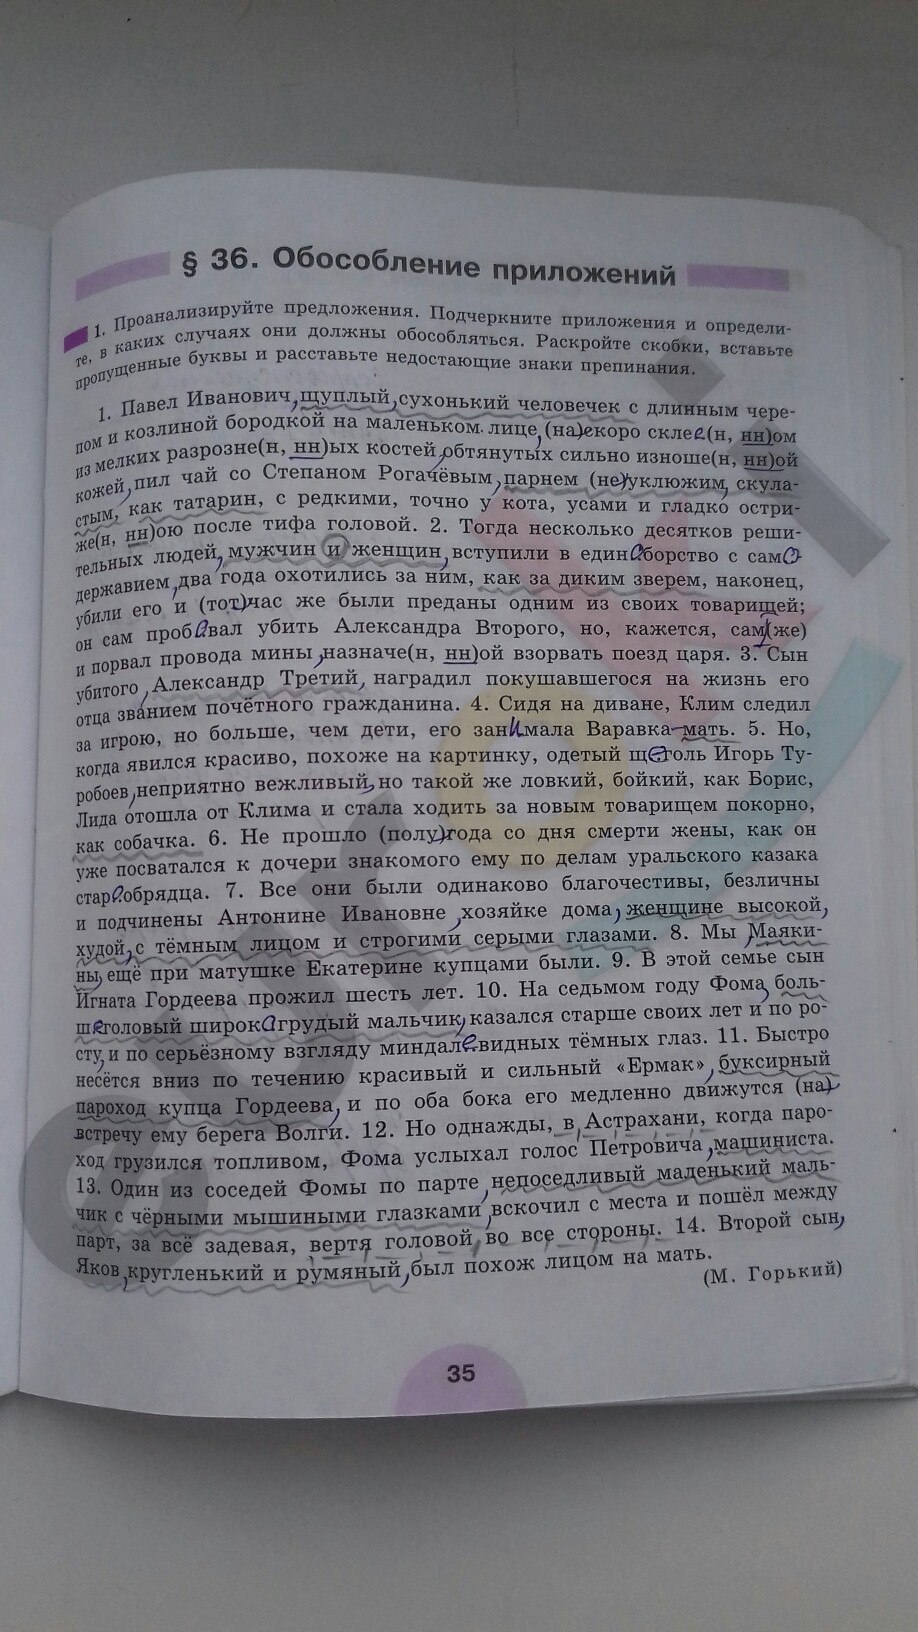 гдз 8 класс рабочая тетрадь часть 2 страница 35 русский язык Рыбченкова, Александрова